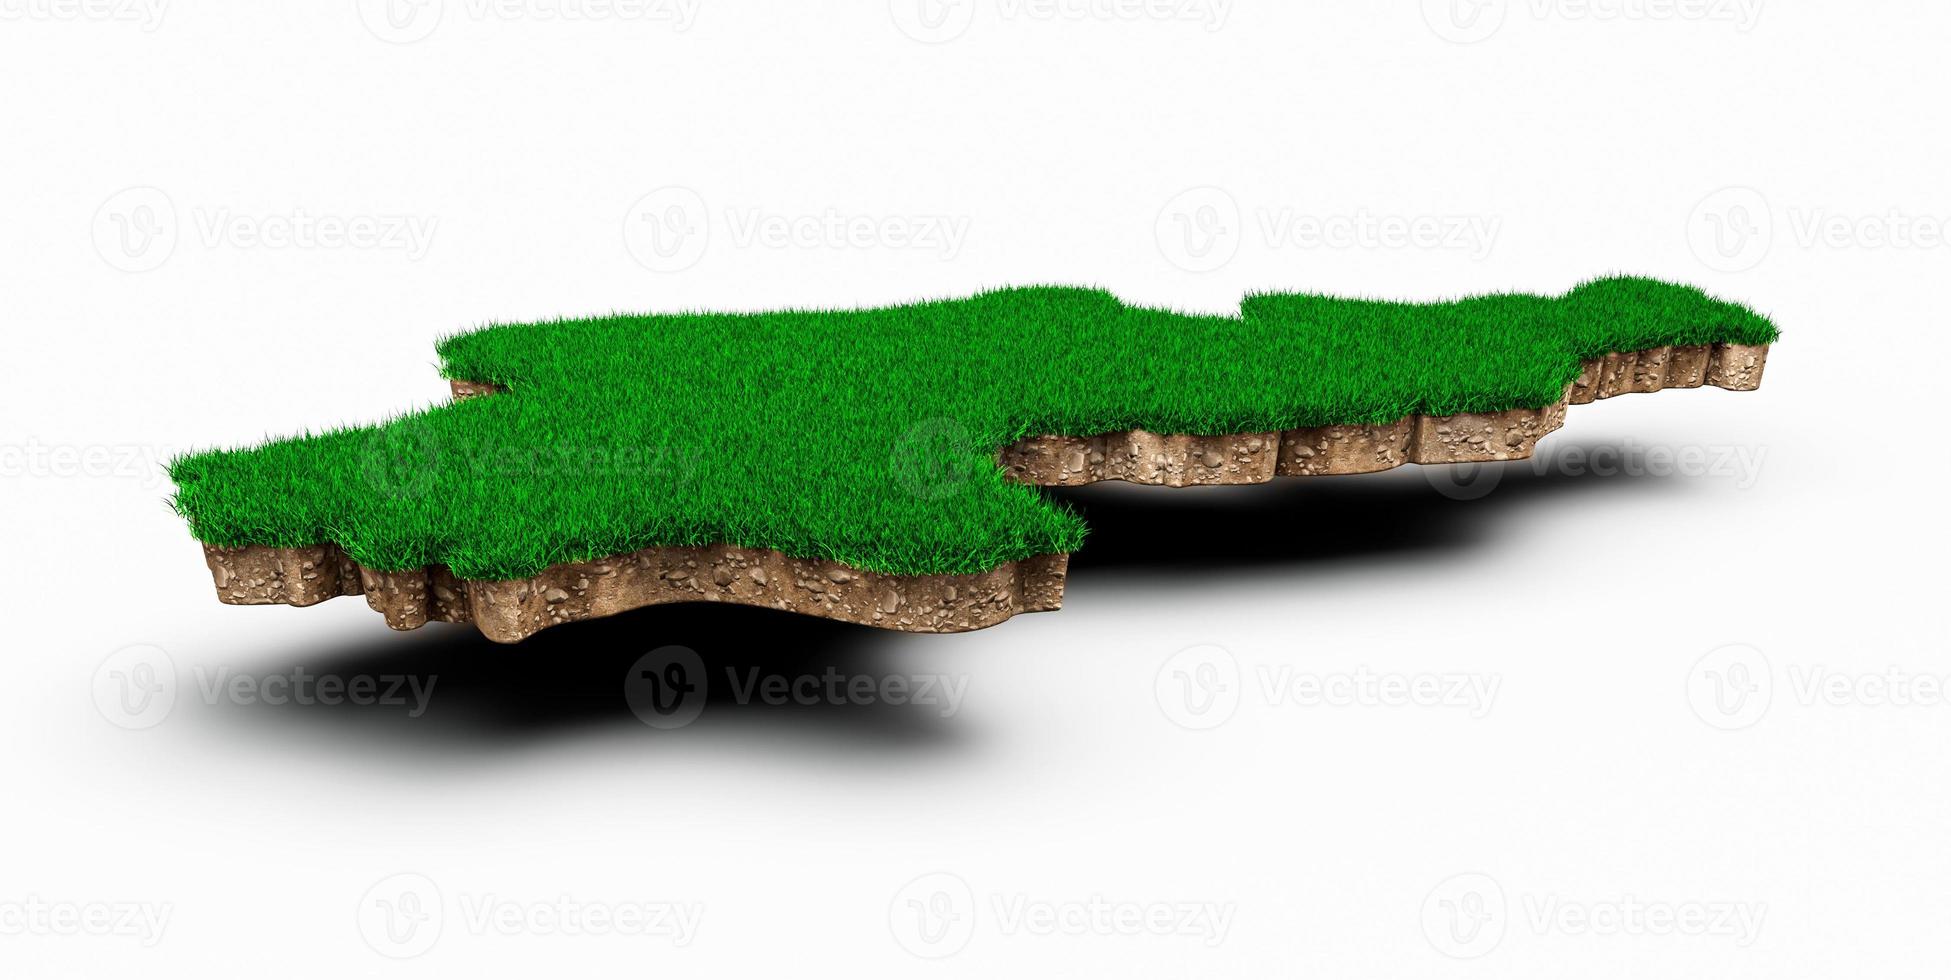 nordkorea karte boden land geologie querschnitt mit grünem gras und felsen bodentextur 3d illustration foto